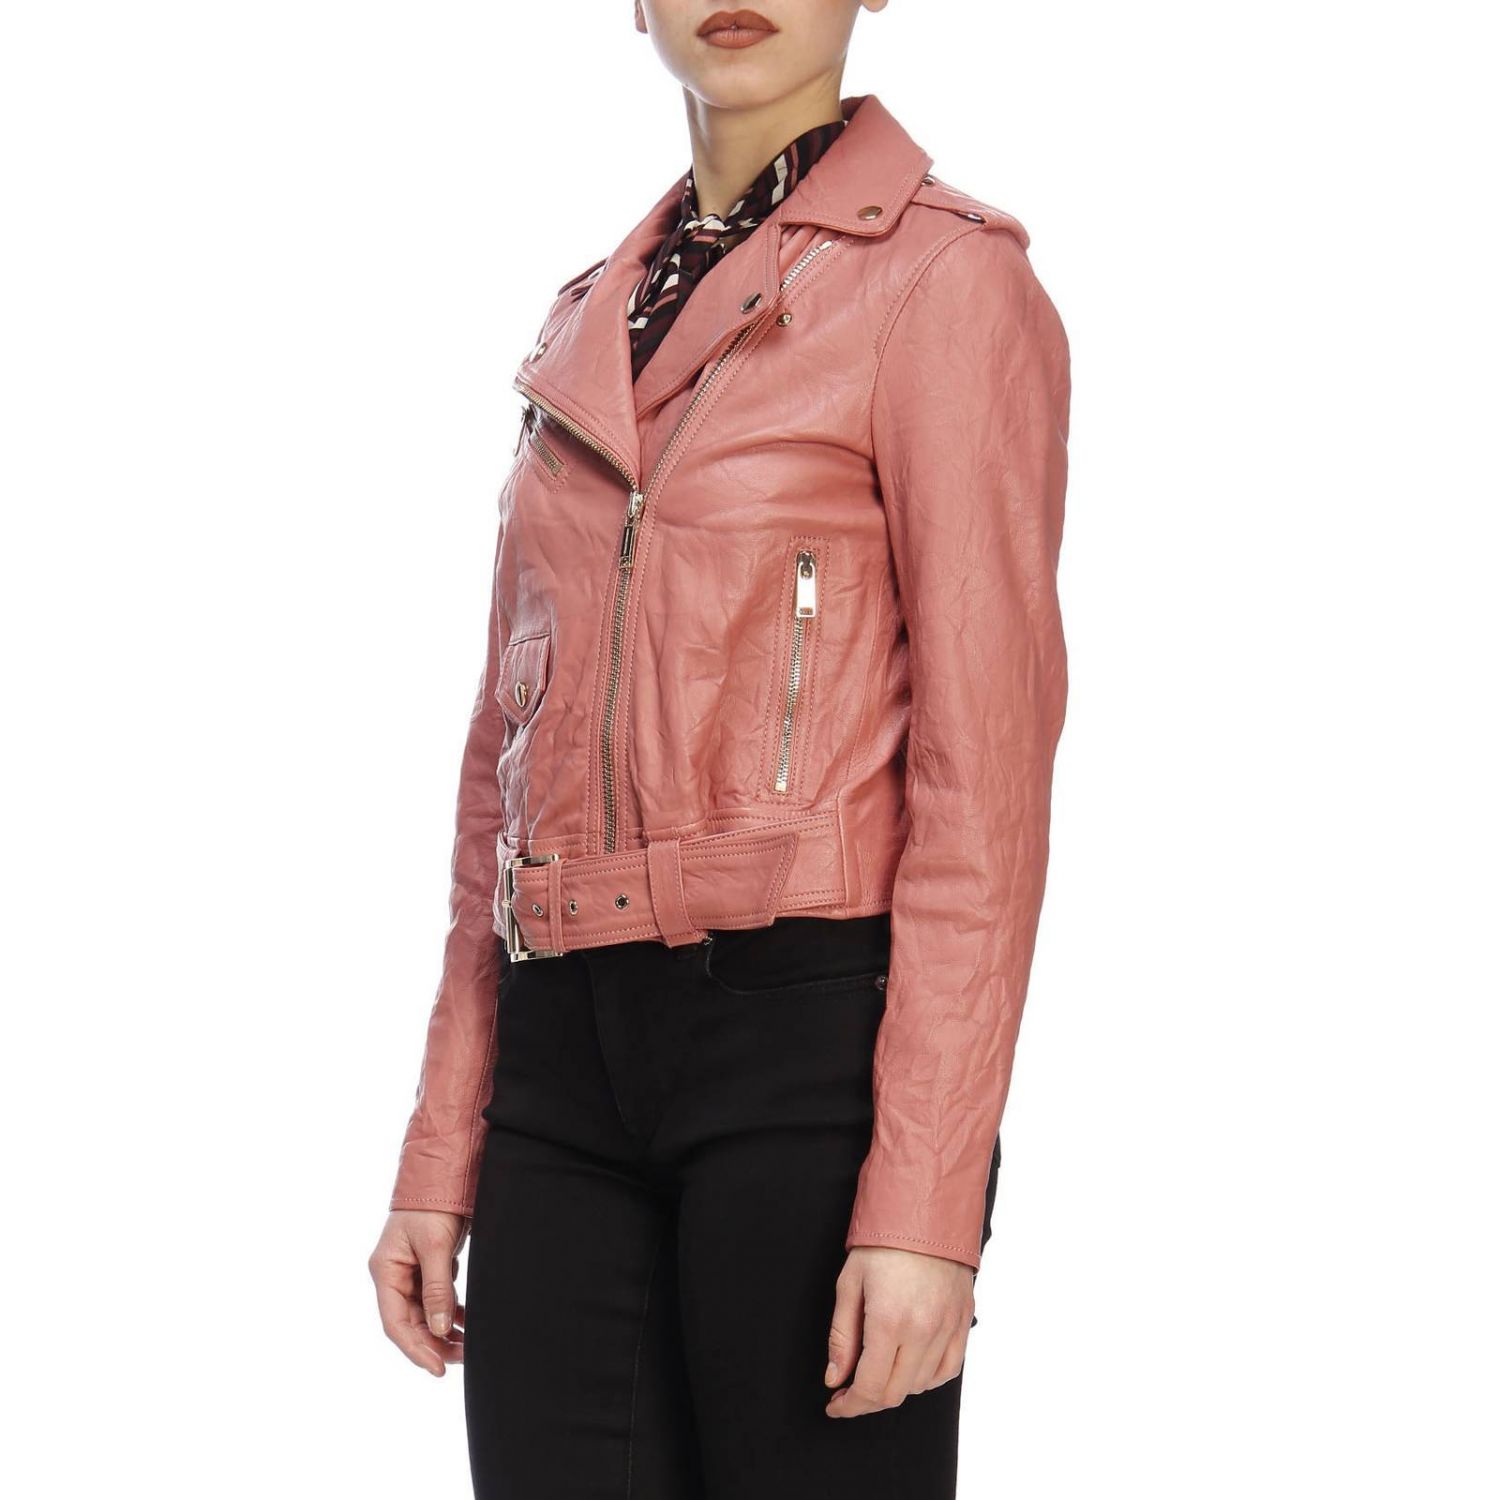 michael kors pink leather jacket